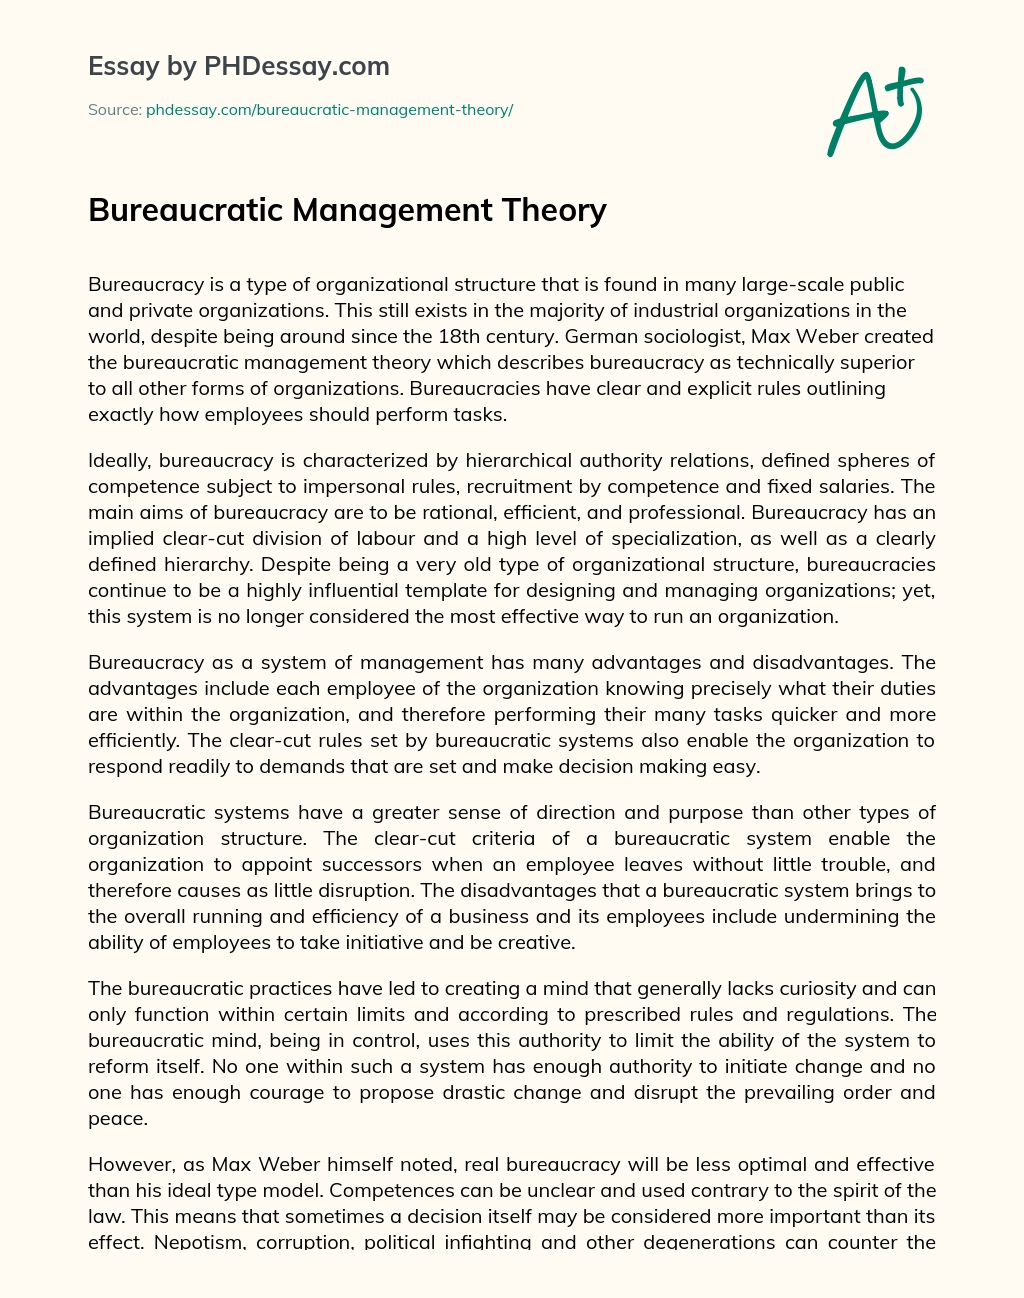 Bureaucratic Management Theory essay